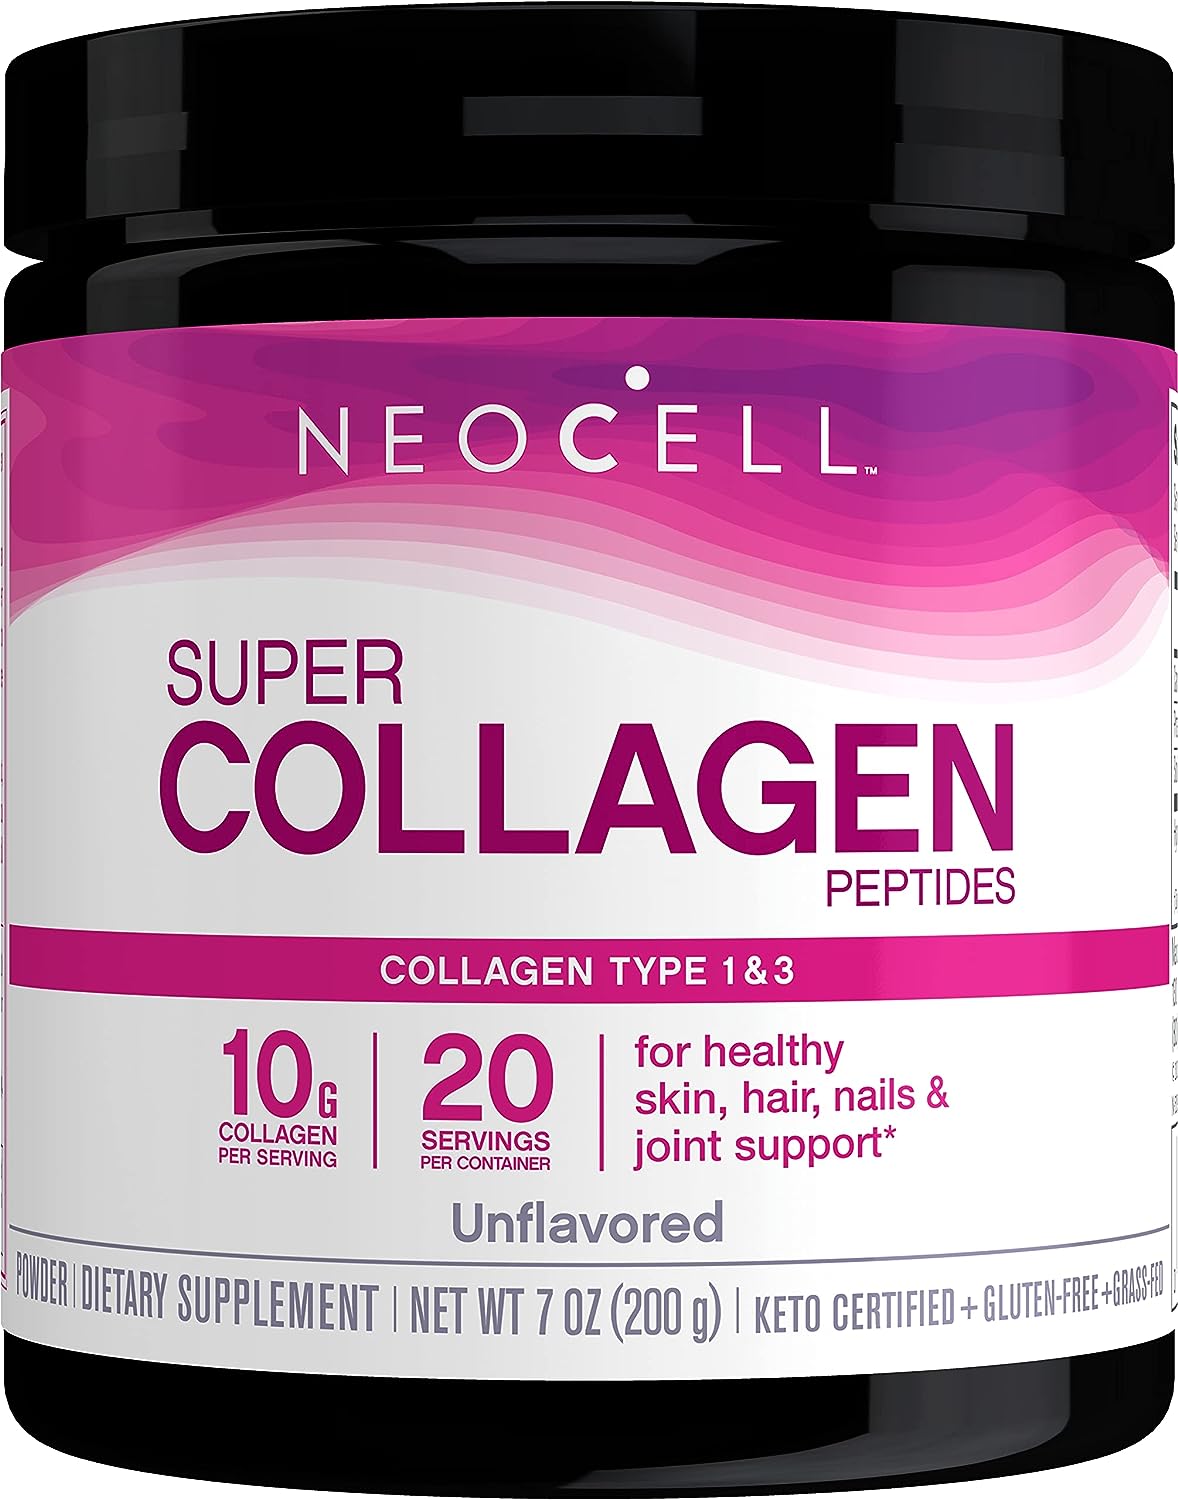 NeoCell Super Collagen Powder, 10g Collagen Peptides per Serving, Gluten Free, Keto Friendly, Non-GM